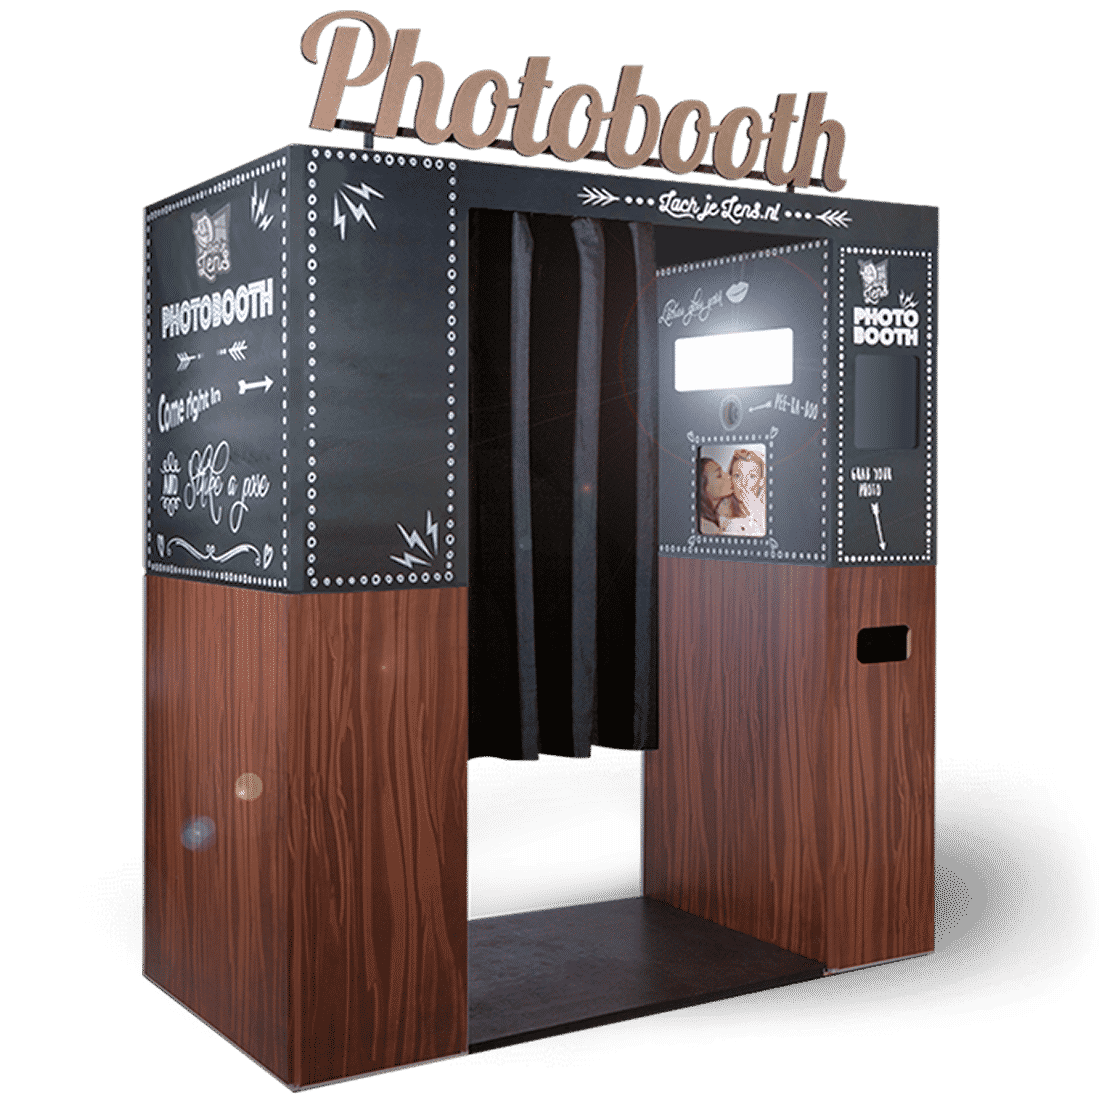 The Original Photobooth